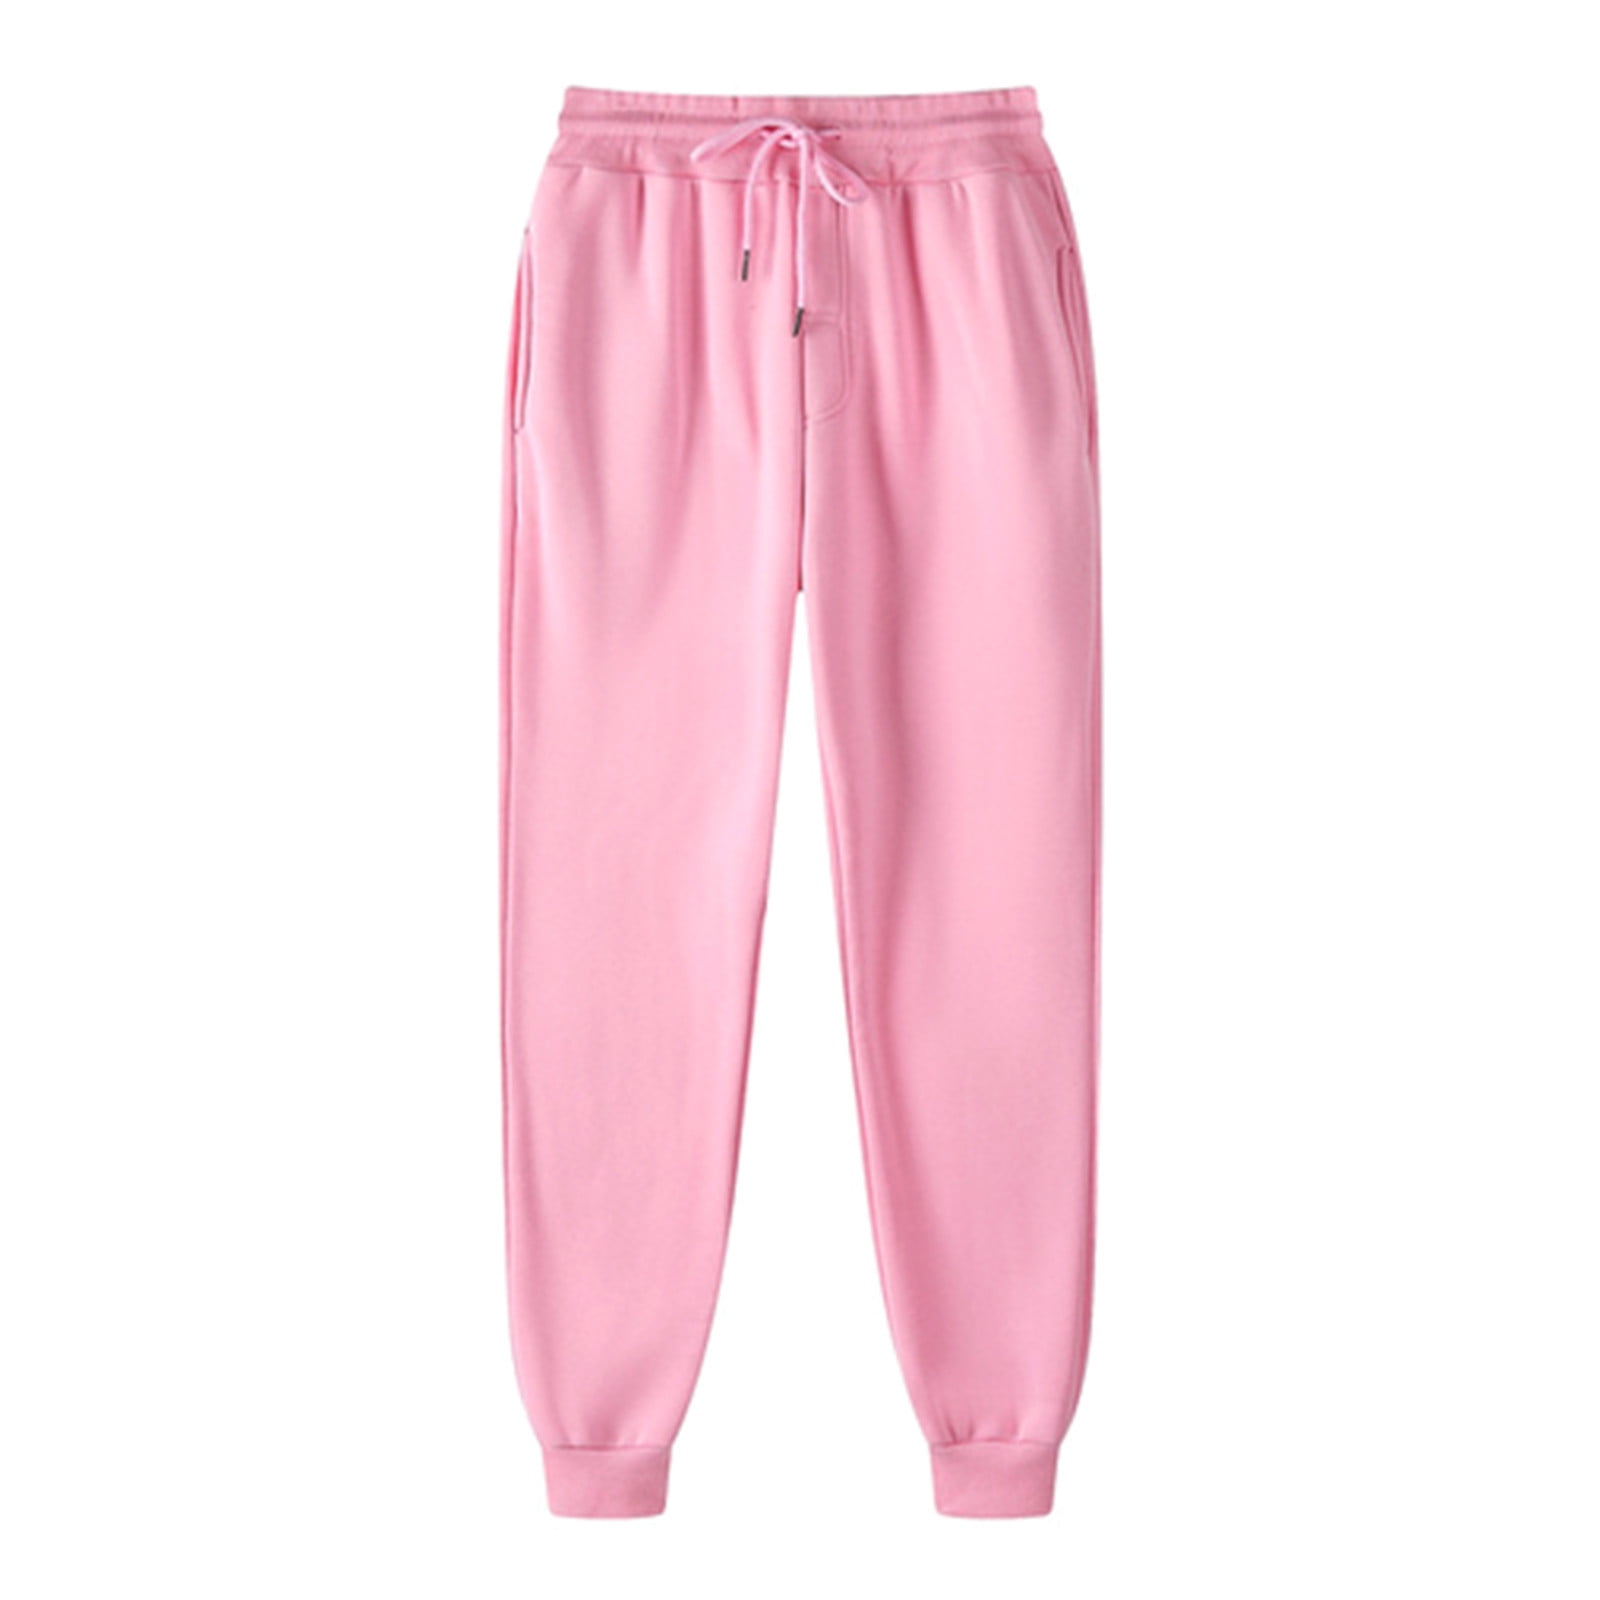 Women Solid Color Pants Adjustable Drawstring Joggers Sweatpants Basic Plus  Size Trousers (Medium, Pink) 